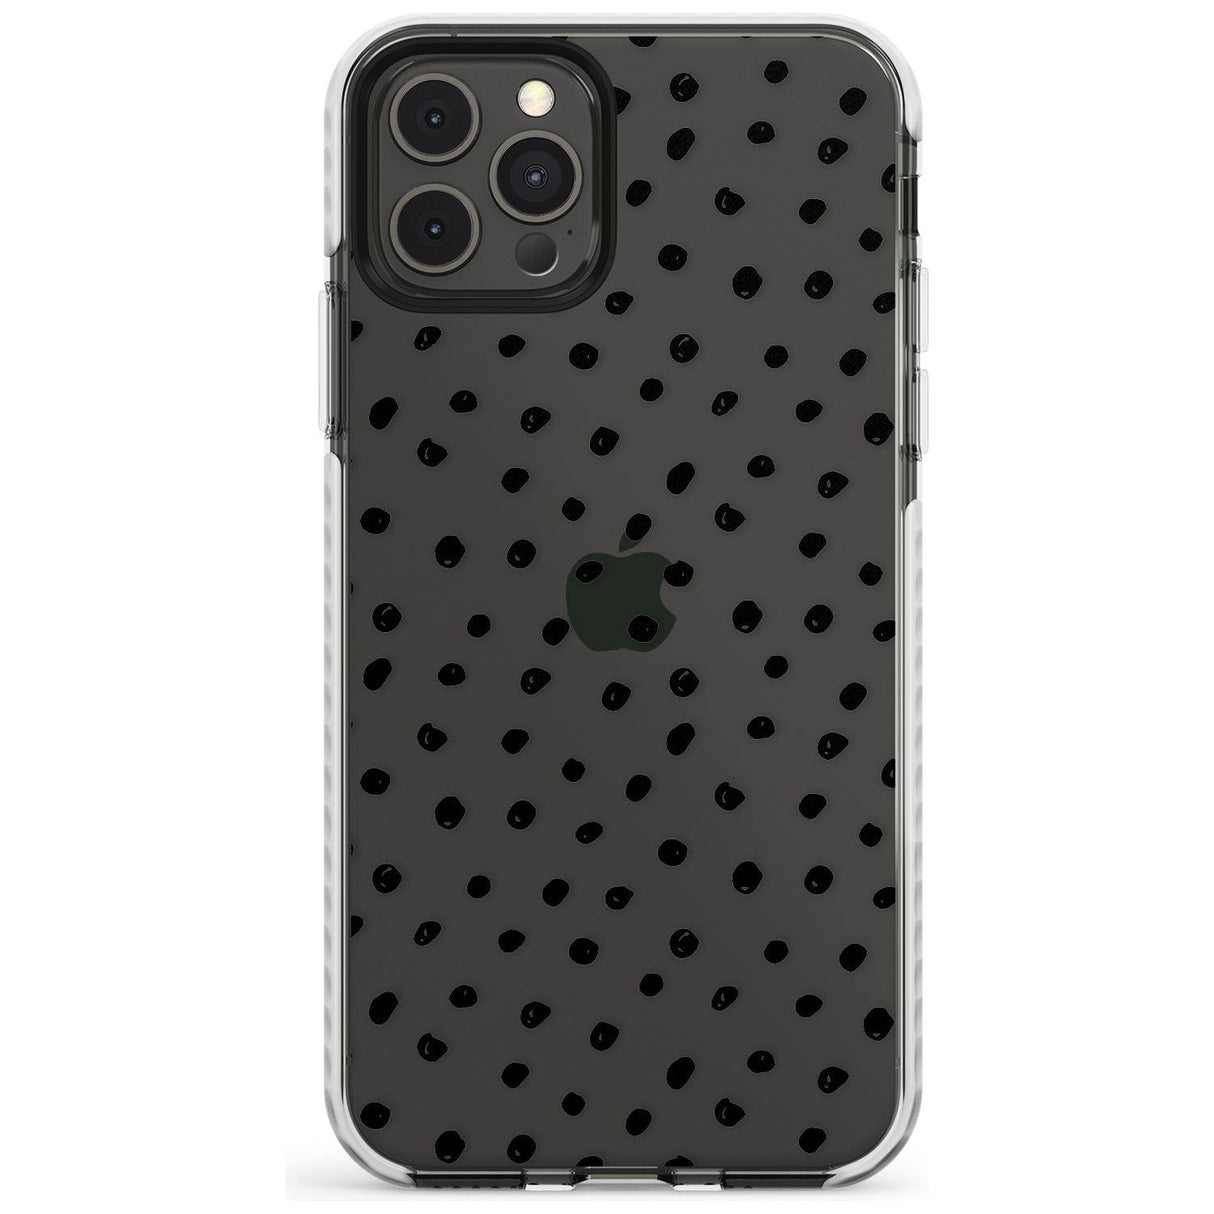 Messy Black Dot Pattern Slim TPU Phone Case for iPhone 11 Pro Max